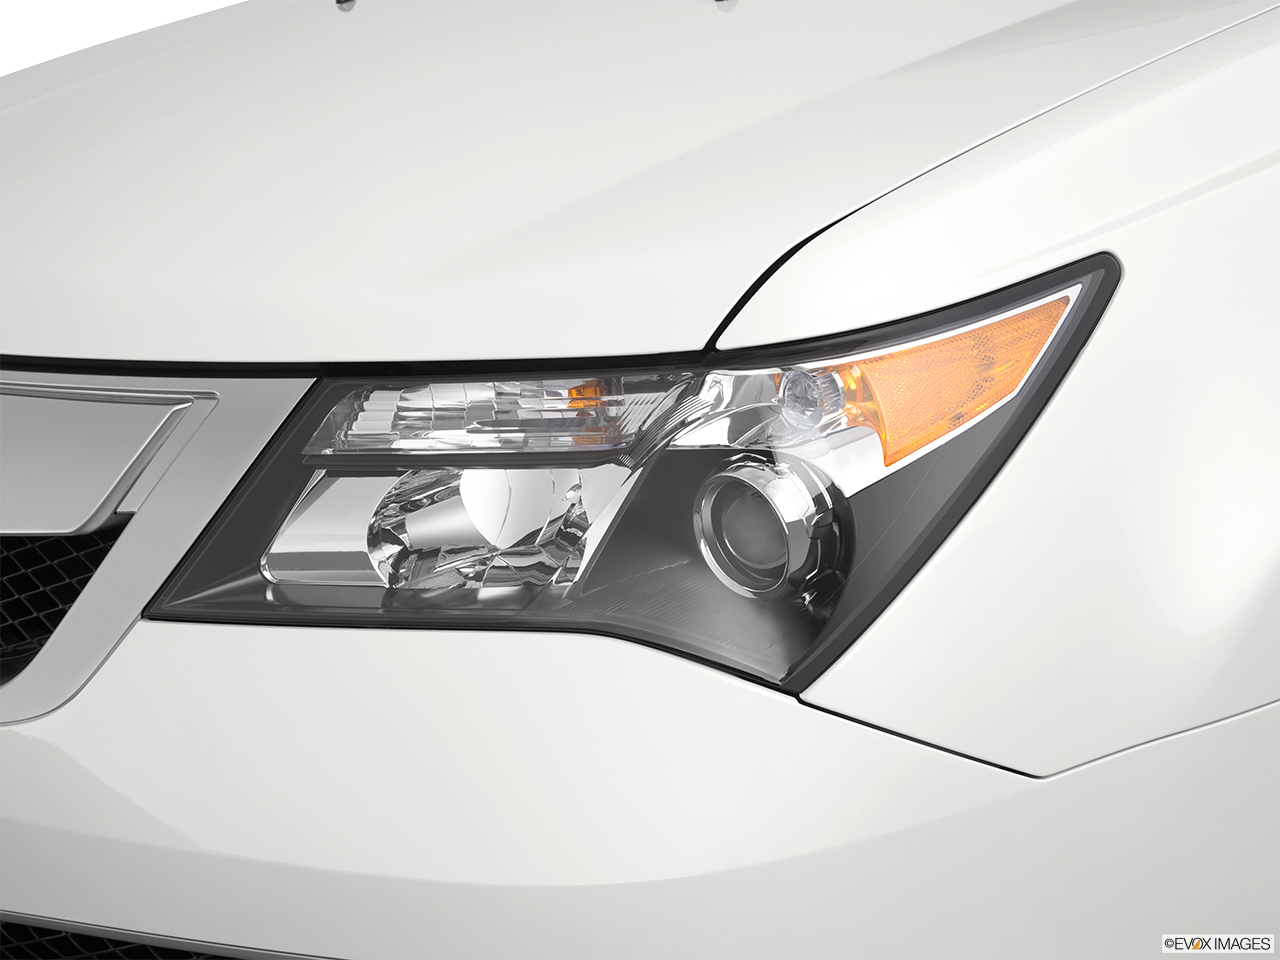 2012 Acura MDX MDX Drivers Side Headlight. 